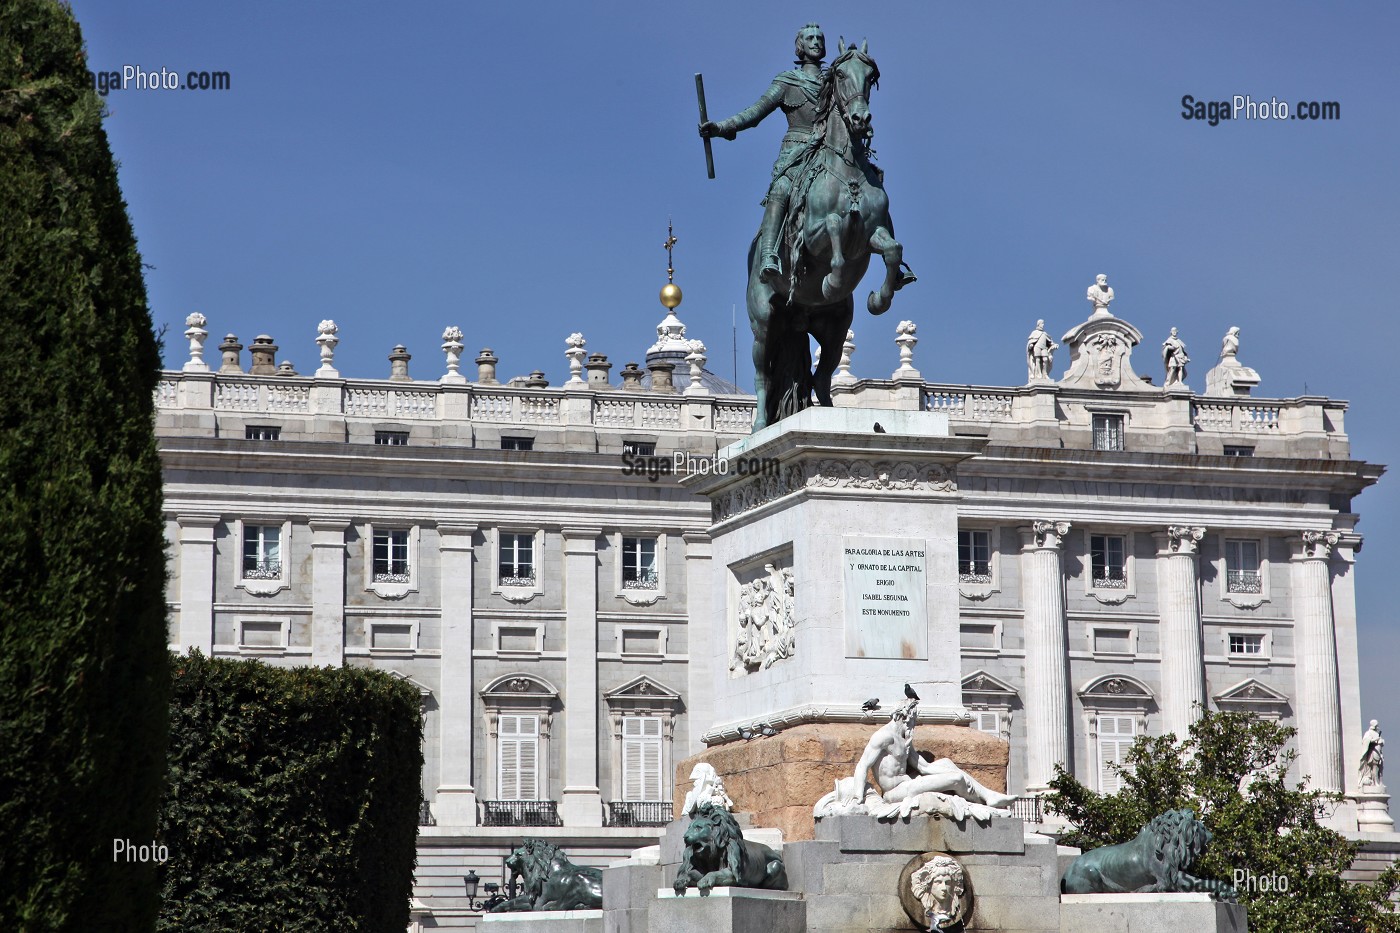 STATUE EQUESTRE DE FELIPE IV (ROI PHILIPPE IV), PALAIS ROYAL (PALACIO REAL), PLAZA ORIENTE, MADRID, ESPAGNE 